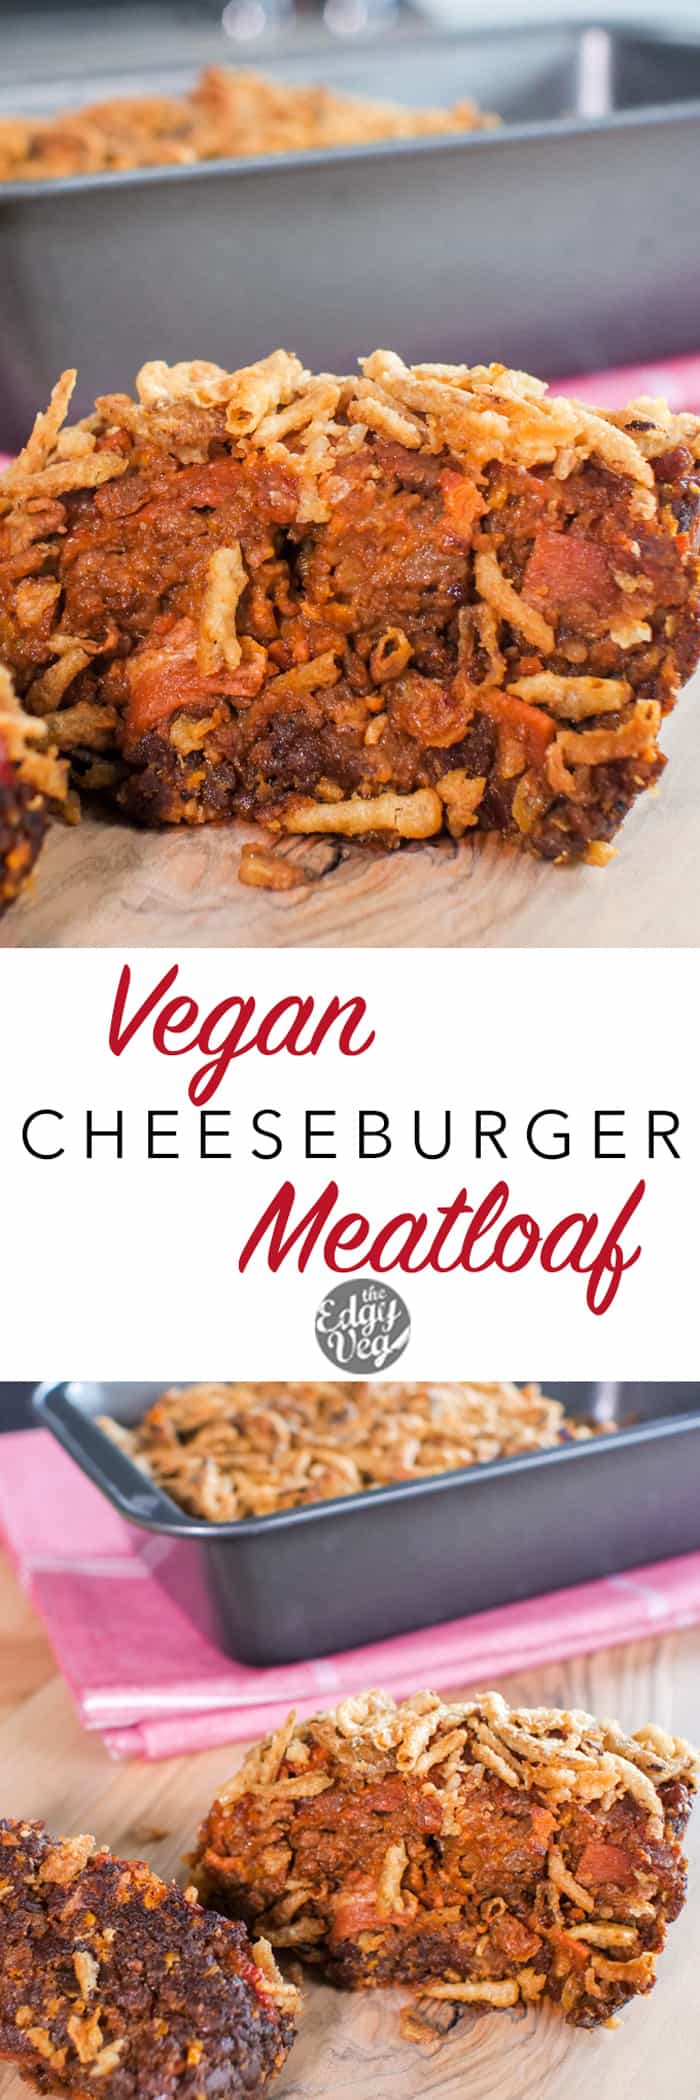 Vegan Bacon Cheeseburger Meatloaf | Paula Deen Inspired Recipe